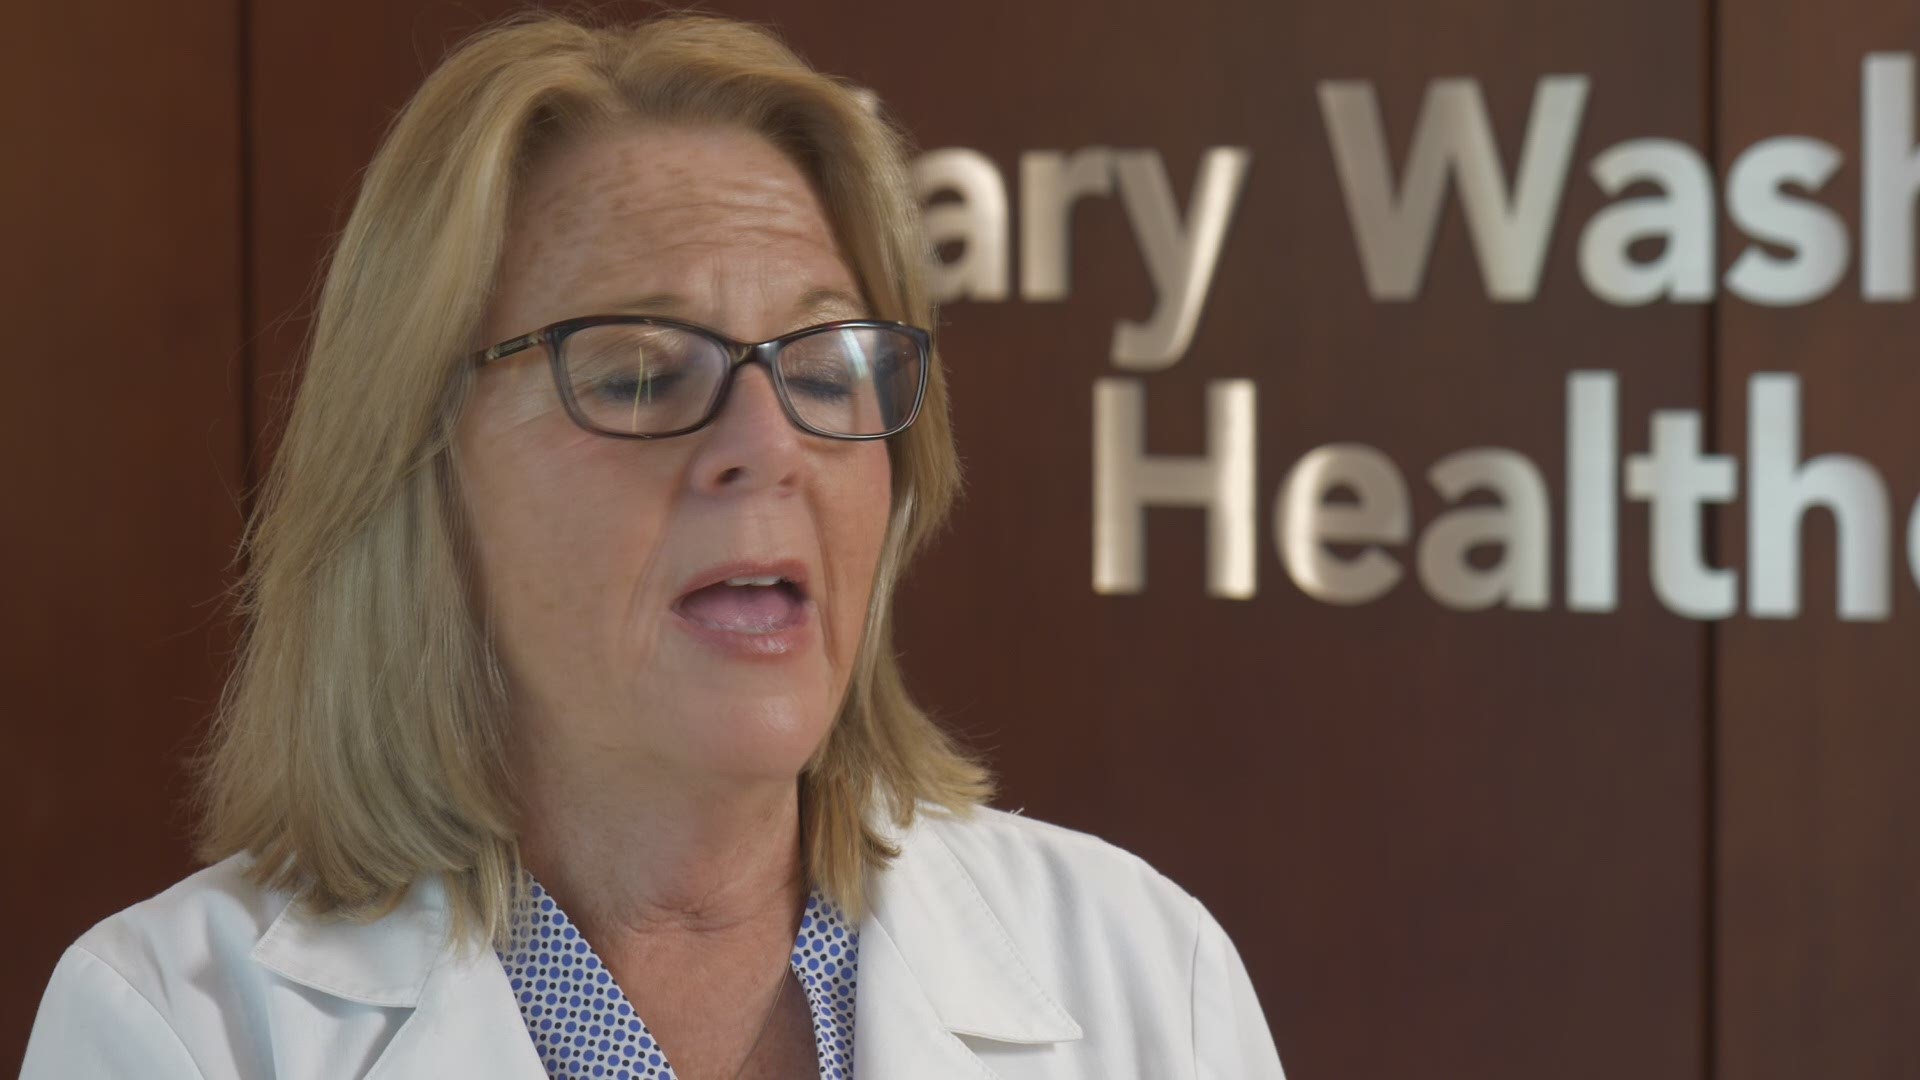 Chief Nursing Officer of Mary Washington Healthcare describes the hard work of nurses during the coronavirus pandemic.